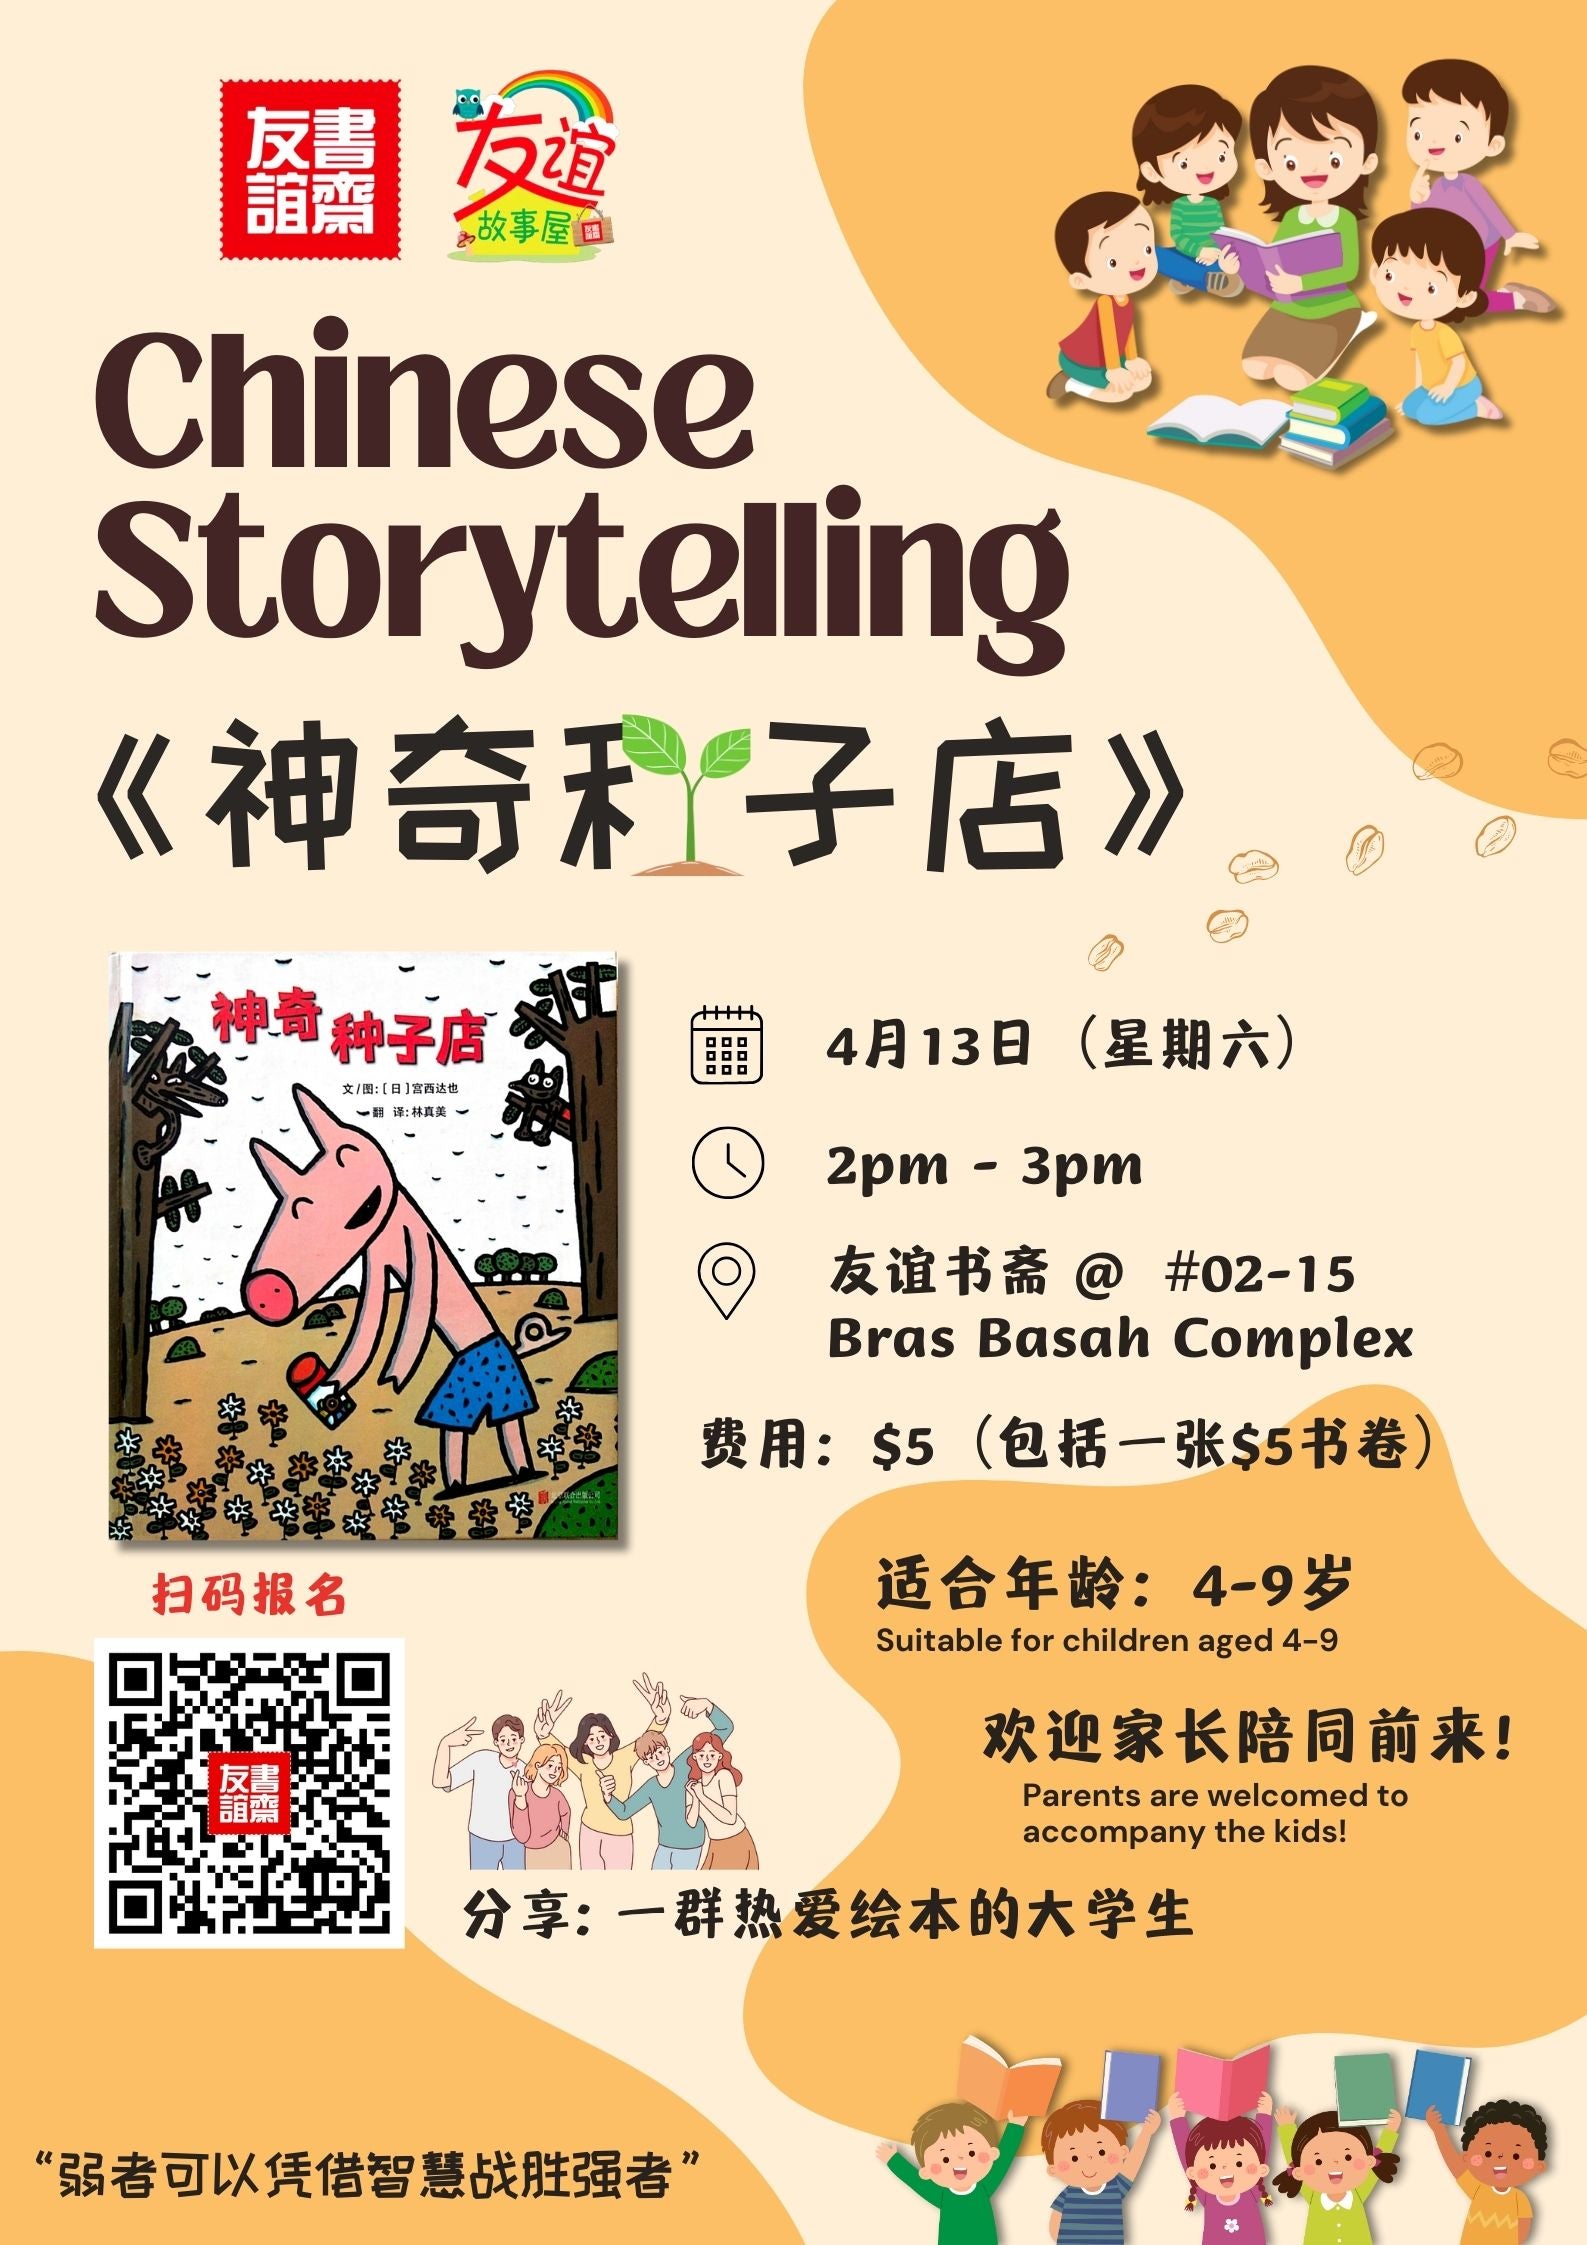 Chinese Storytelling 《神奇种子店》